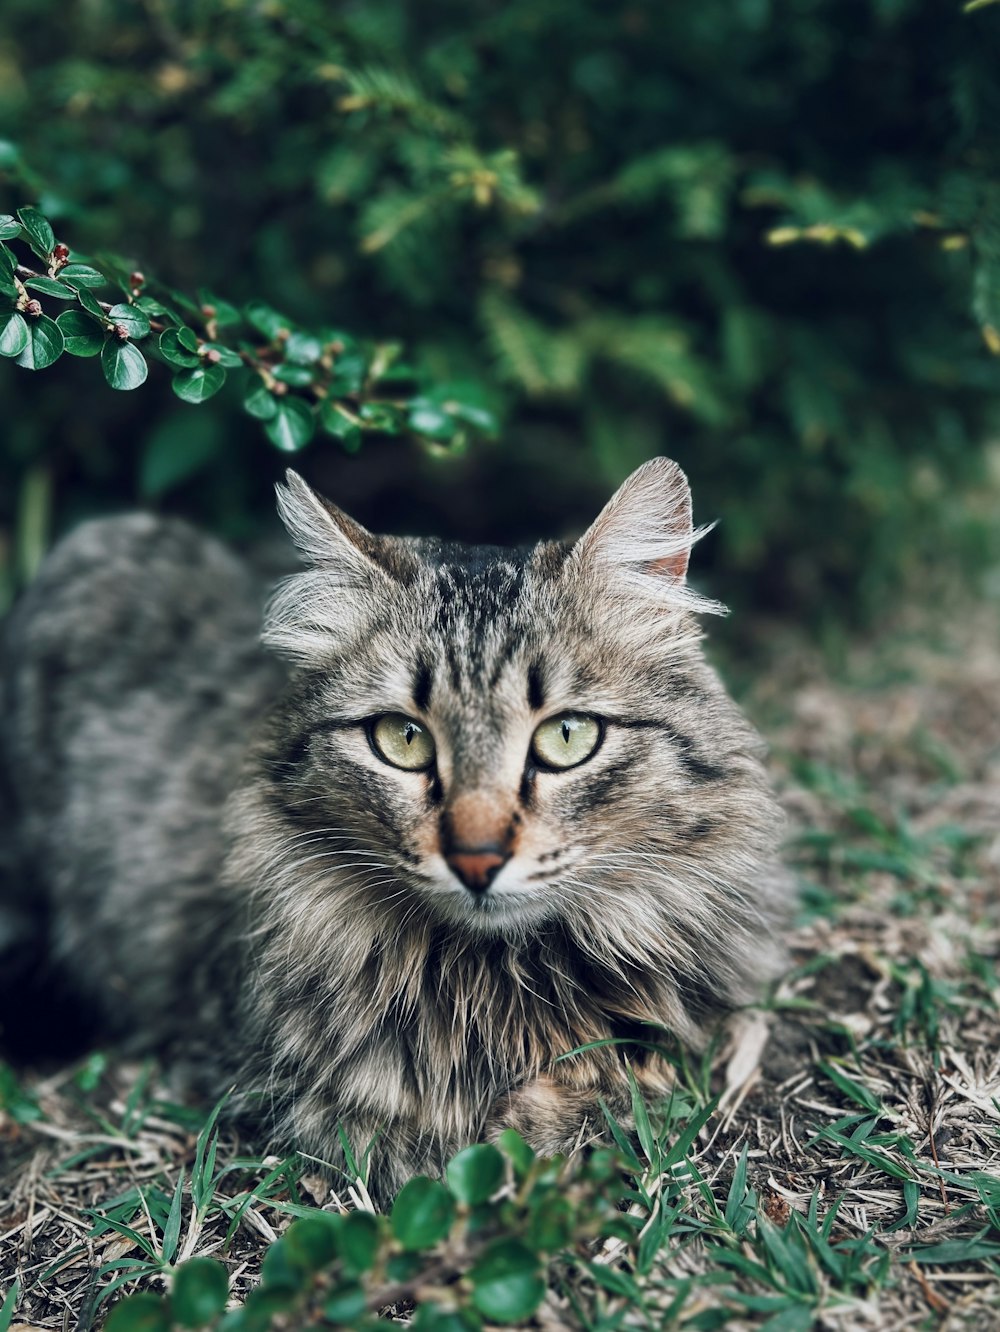 a cat sitting in the grass near a bush